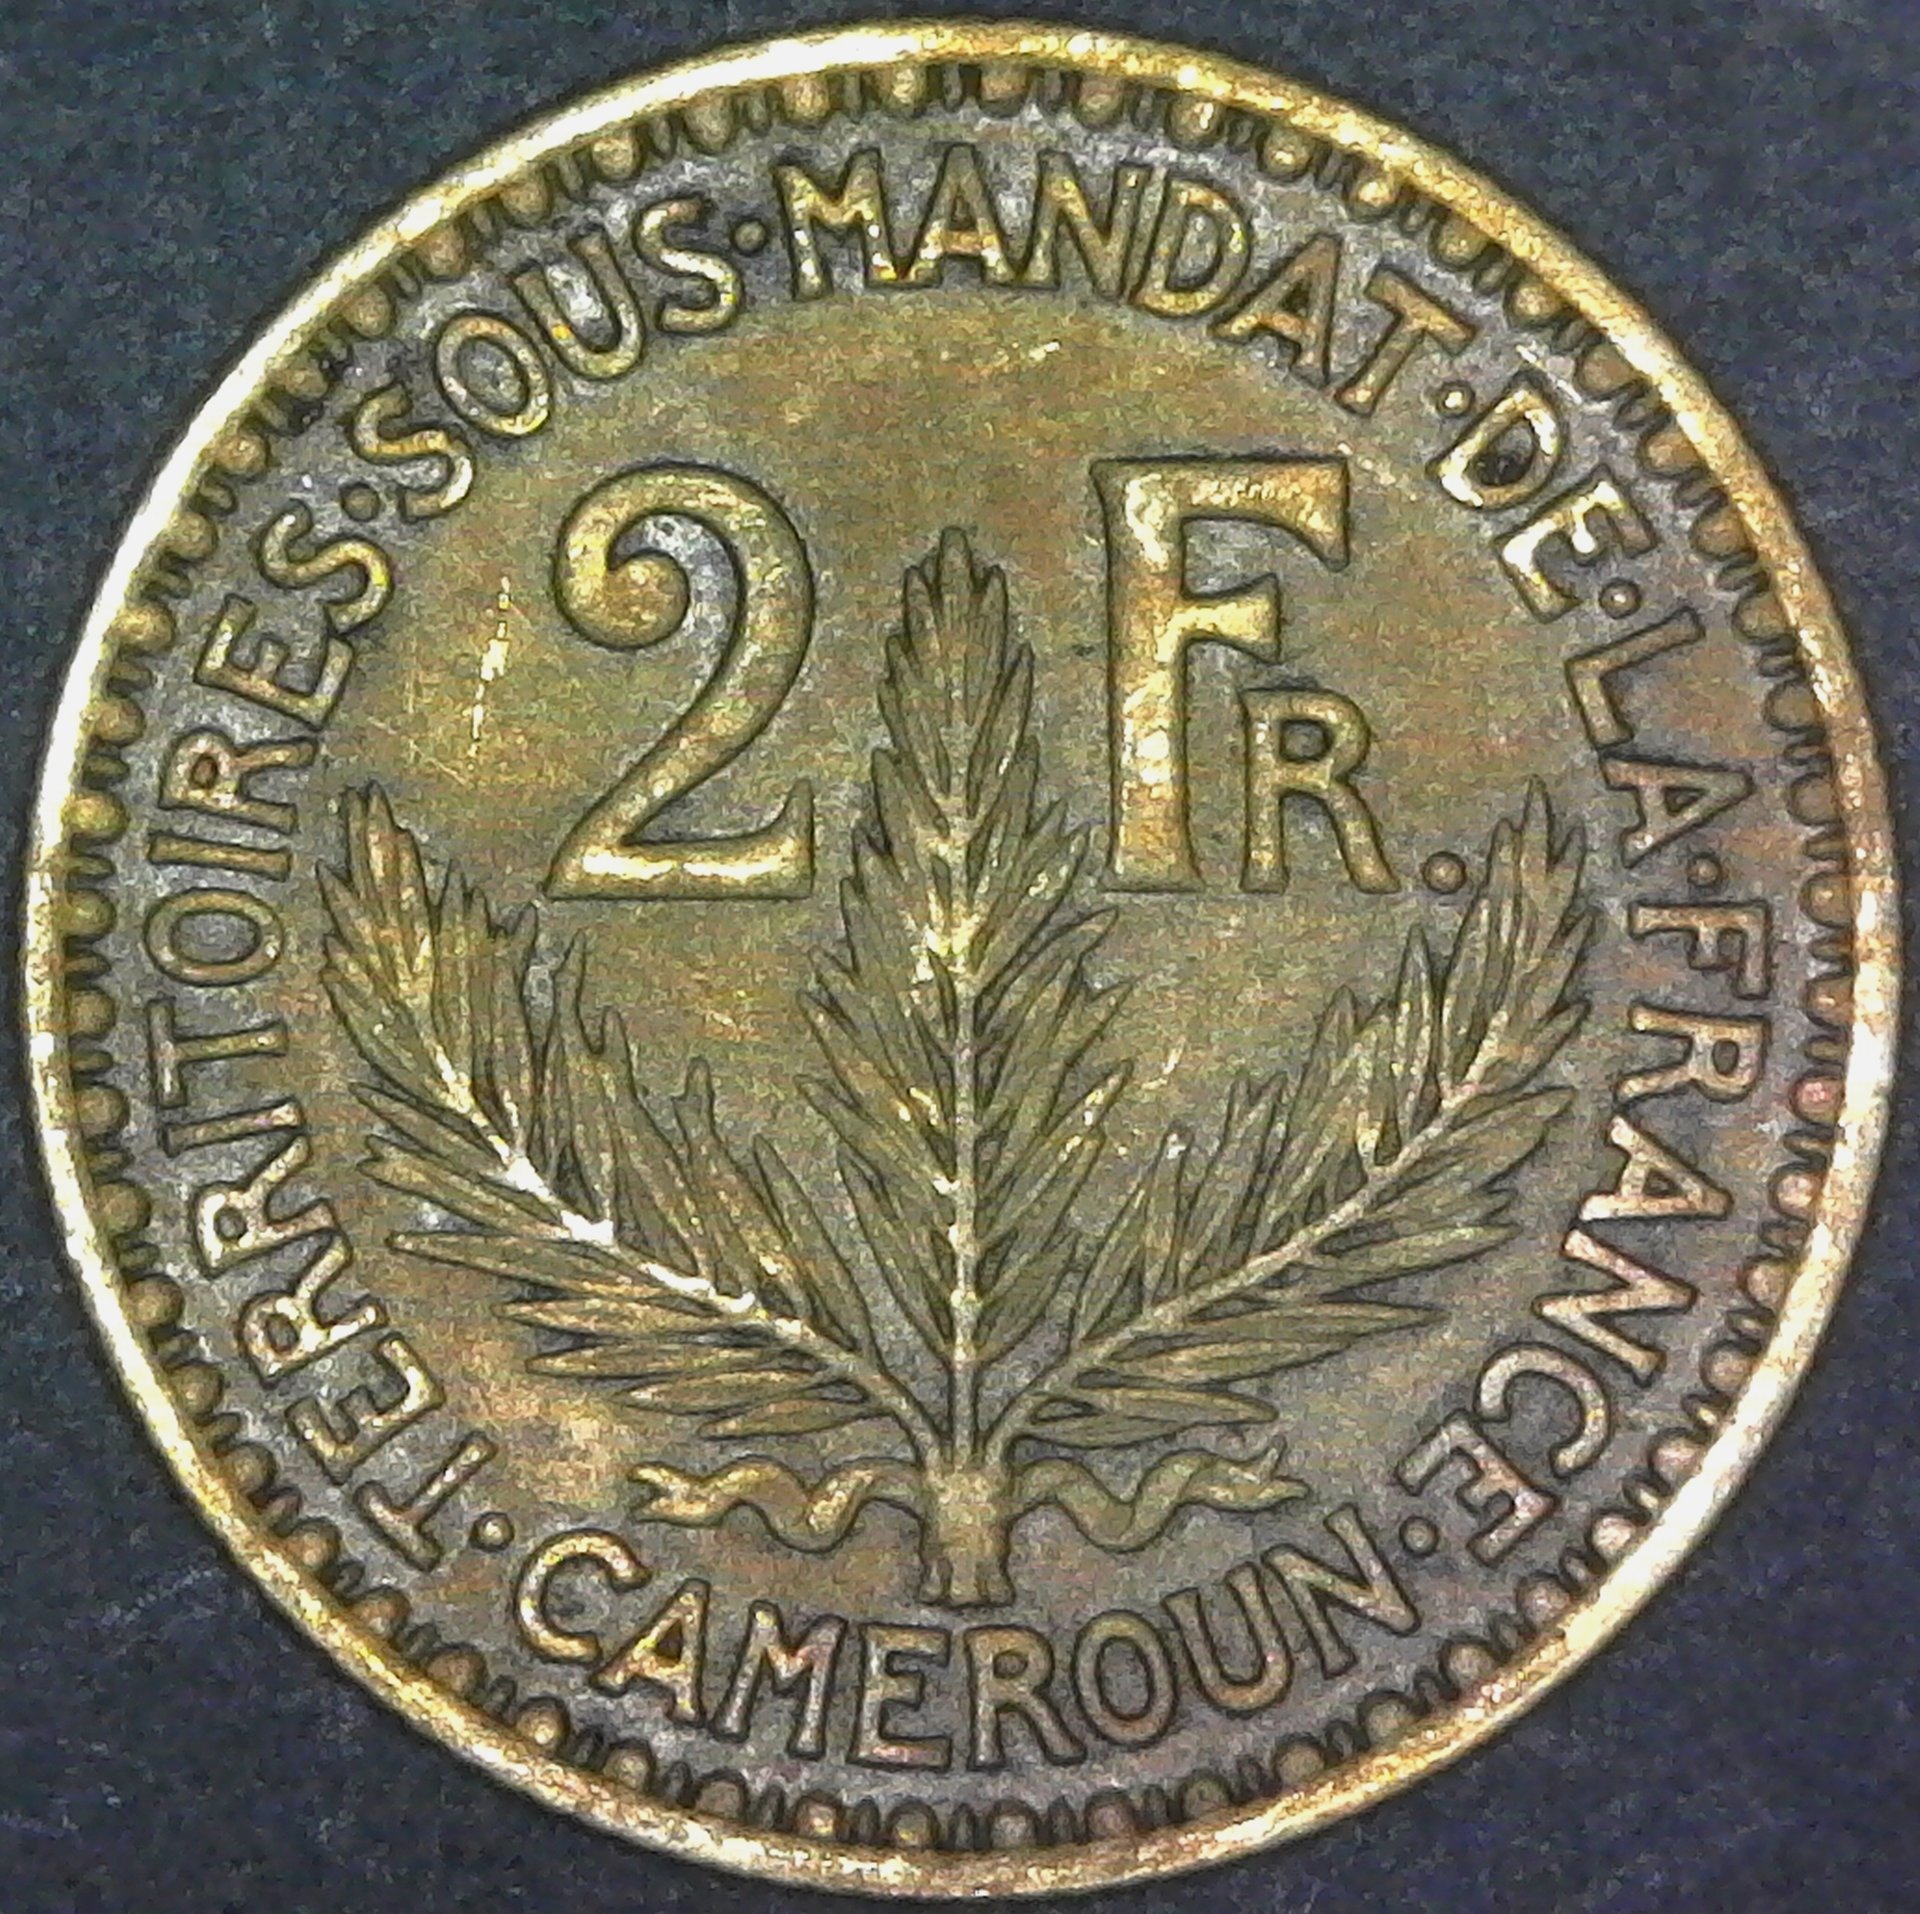 Cameroon 2 Francs 1924 obverse.jpg